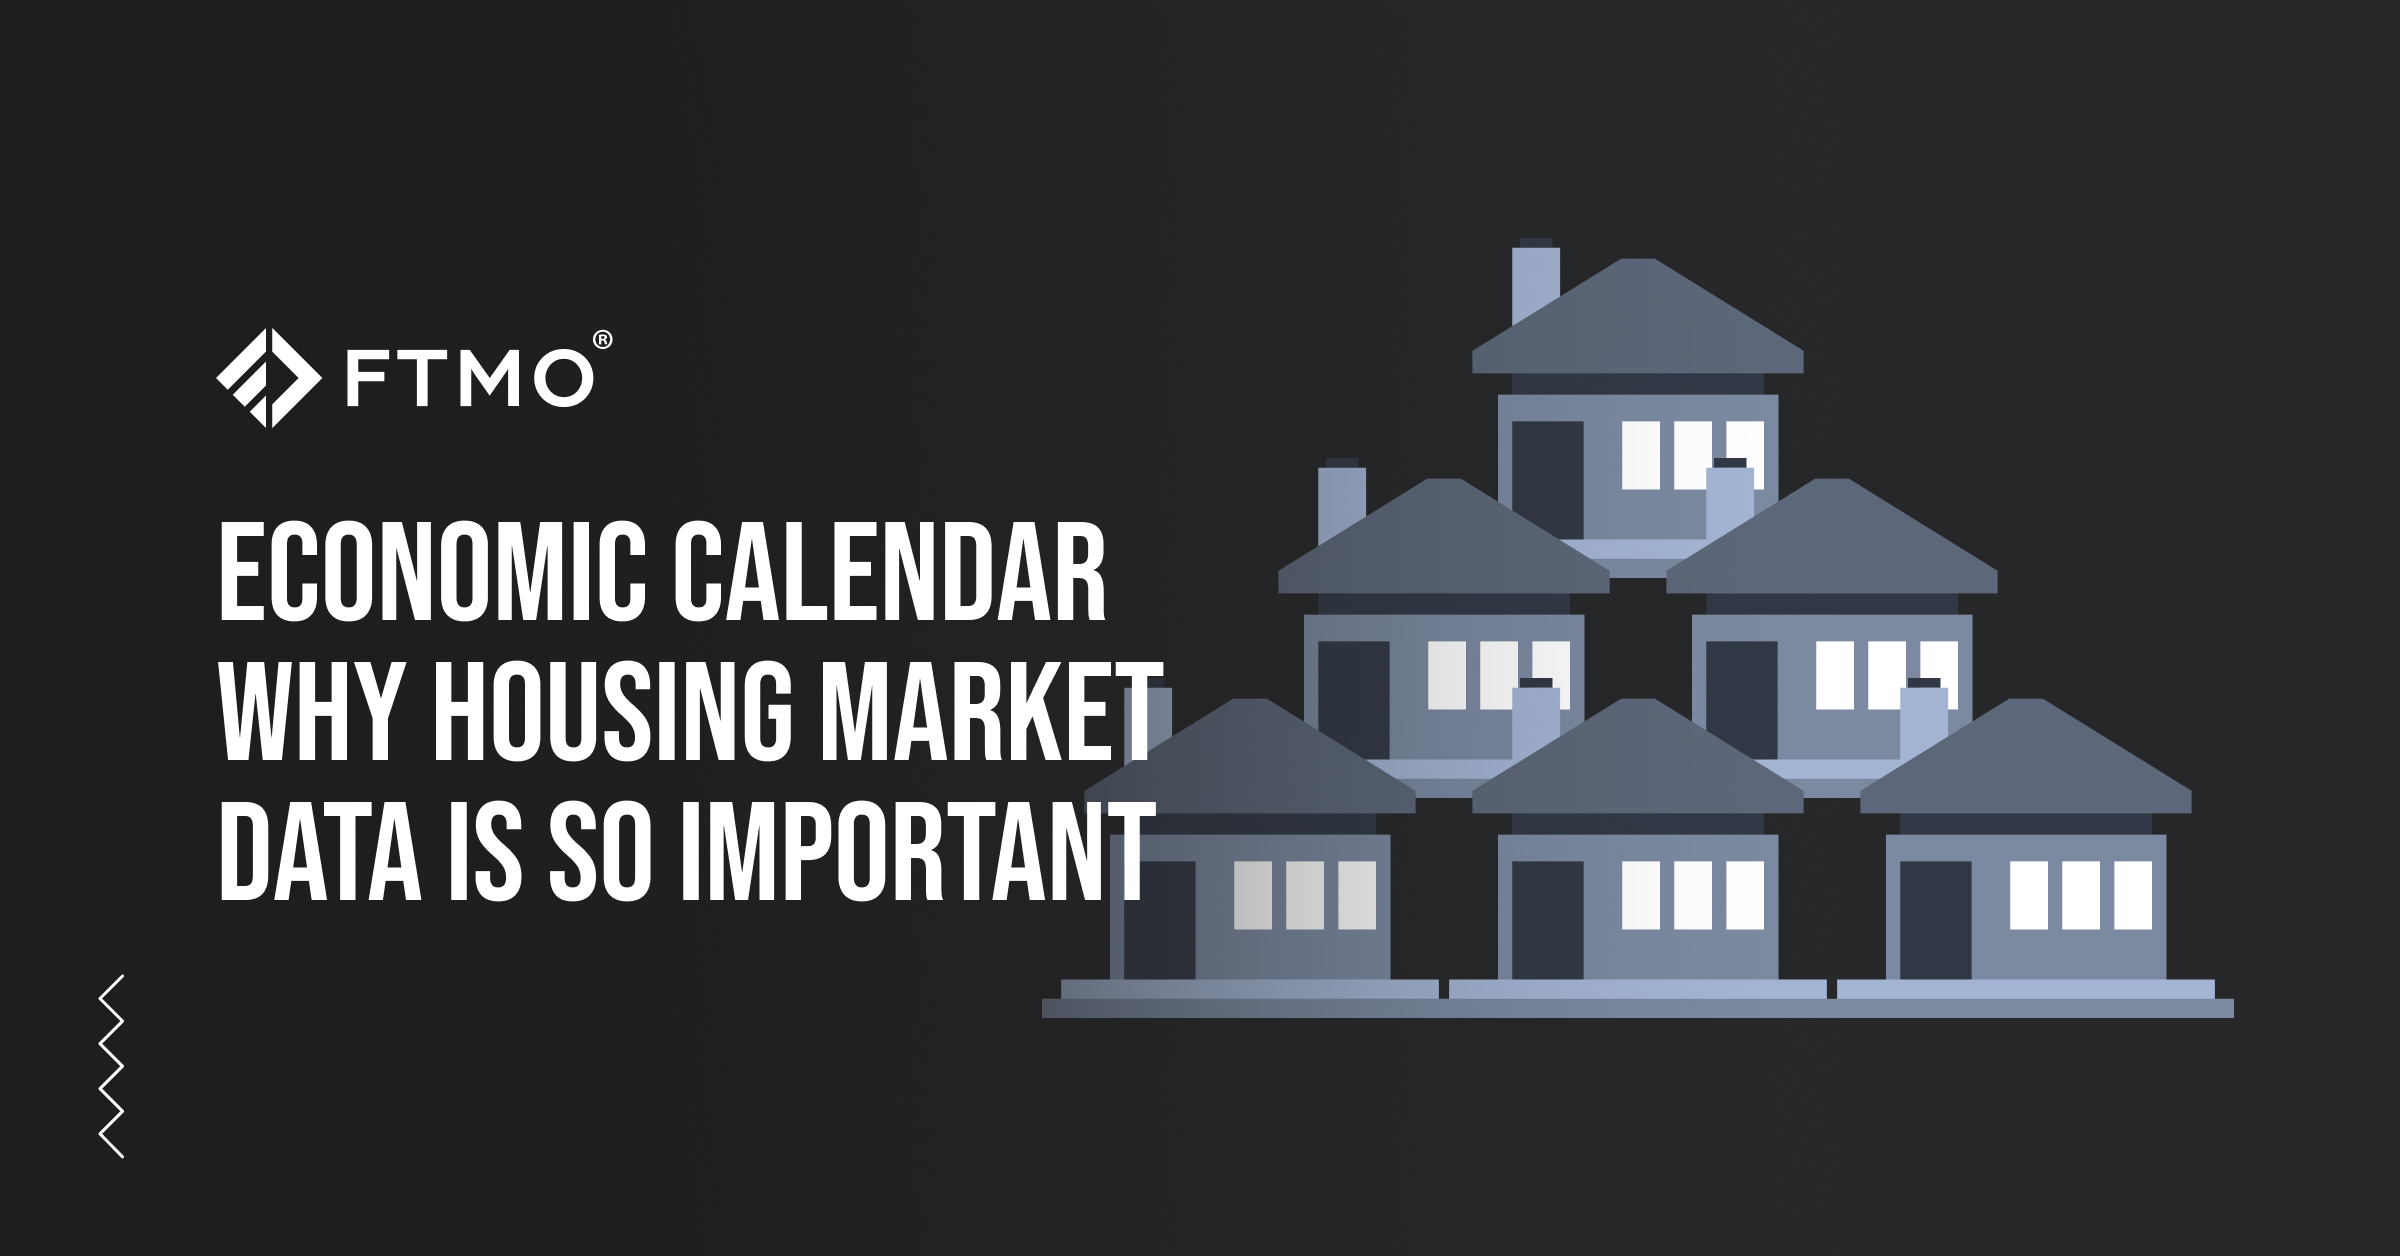 Economic calendar why housing market data is so important FTMO